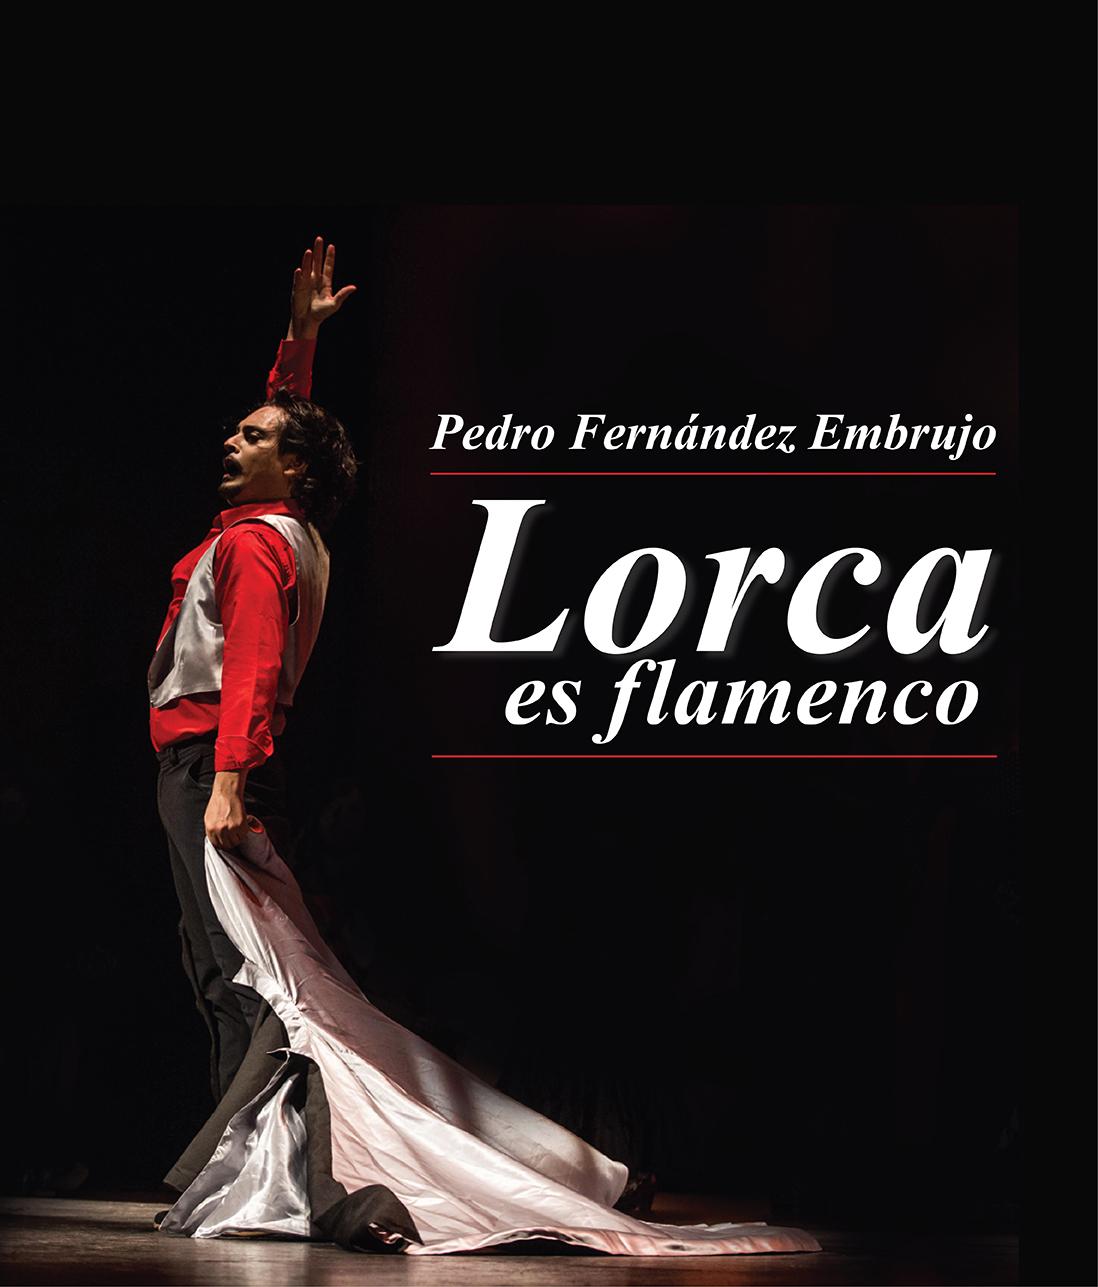 LORCA, es flamenco